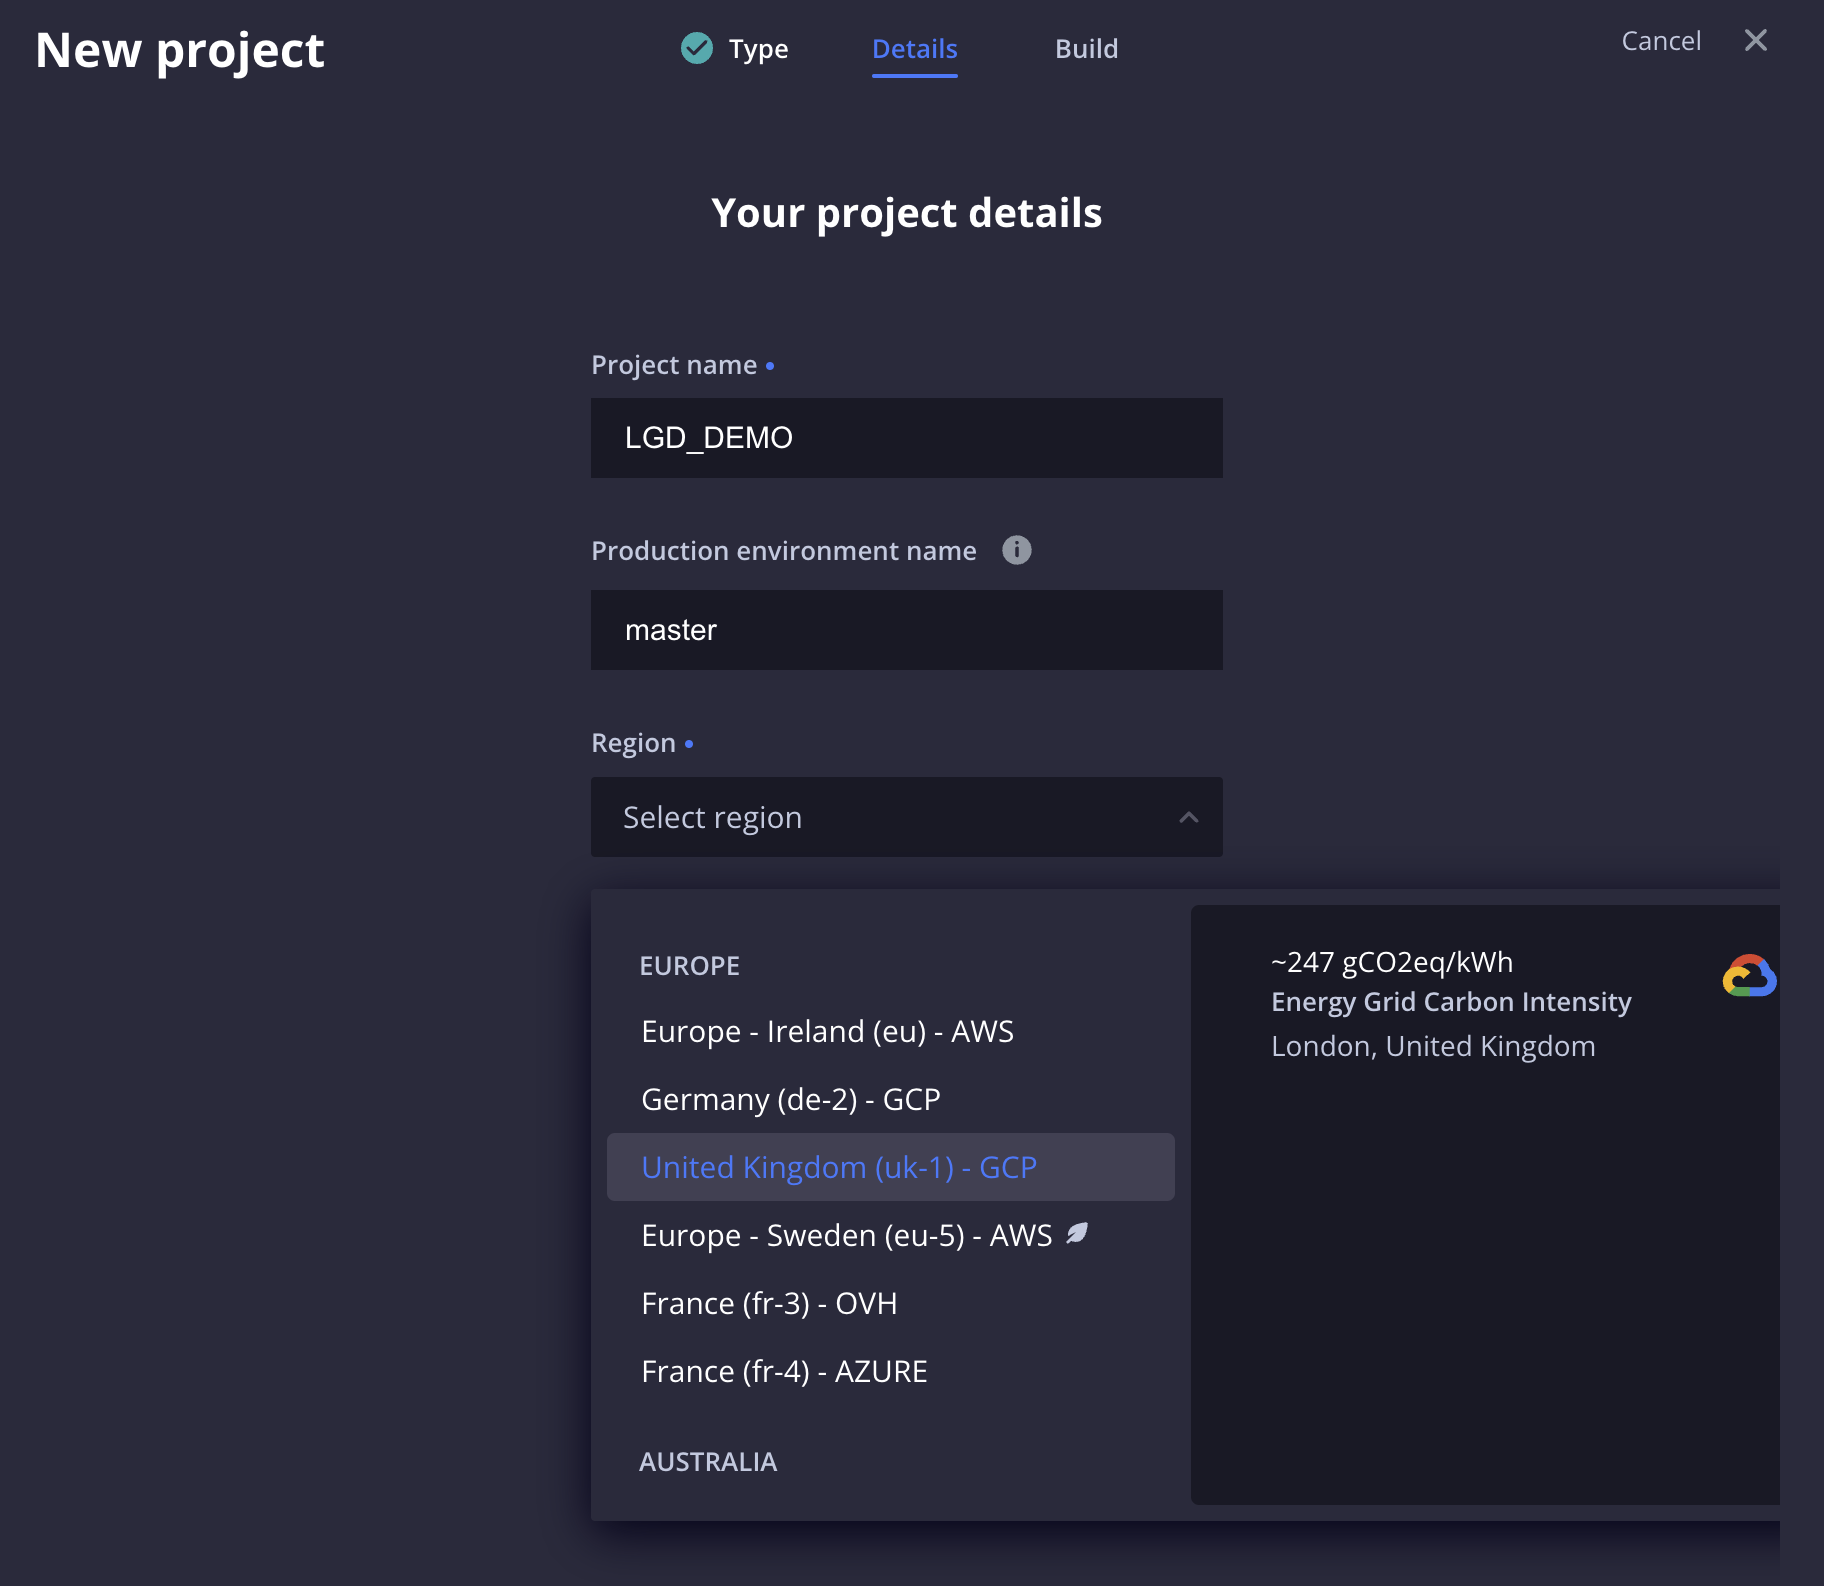 platform.sh: New project details screen